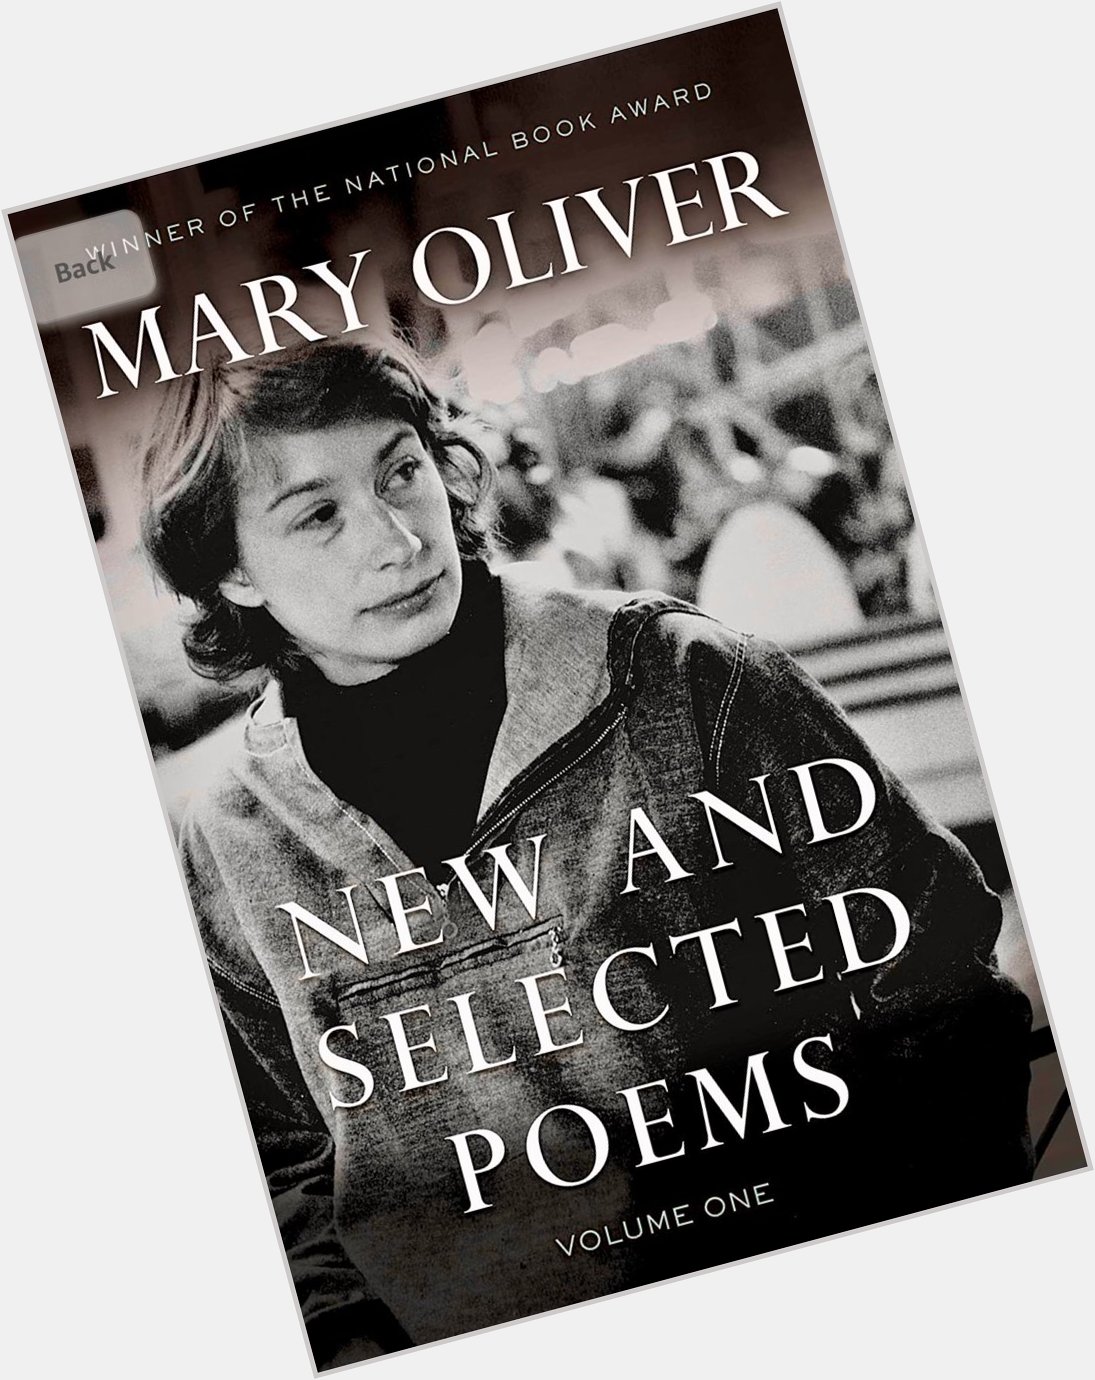 Happy Birthday Mary Oliver, Lesbian poet and essayist, born 10 September 1935. 